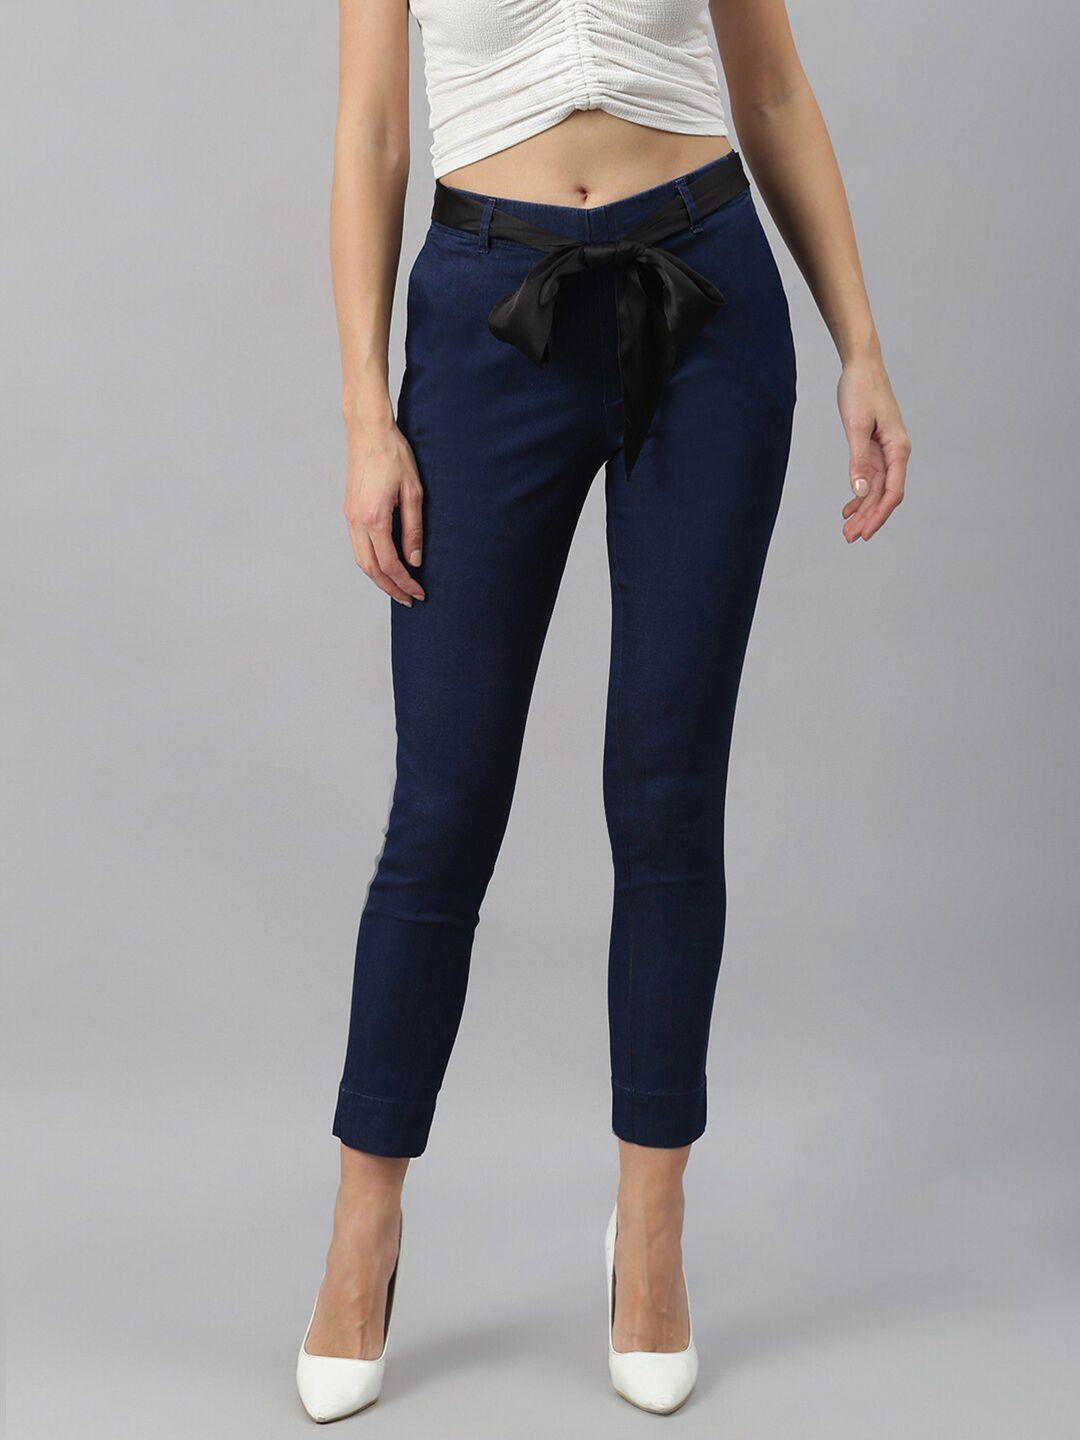 xpose women navy blue solid slim fit denim jeggings with satin belt